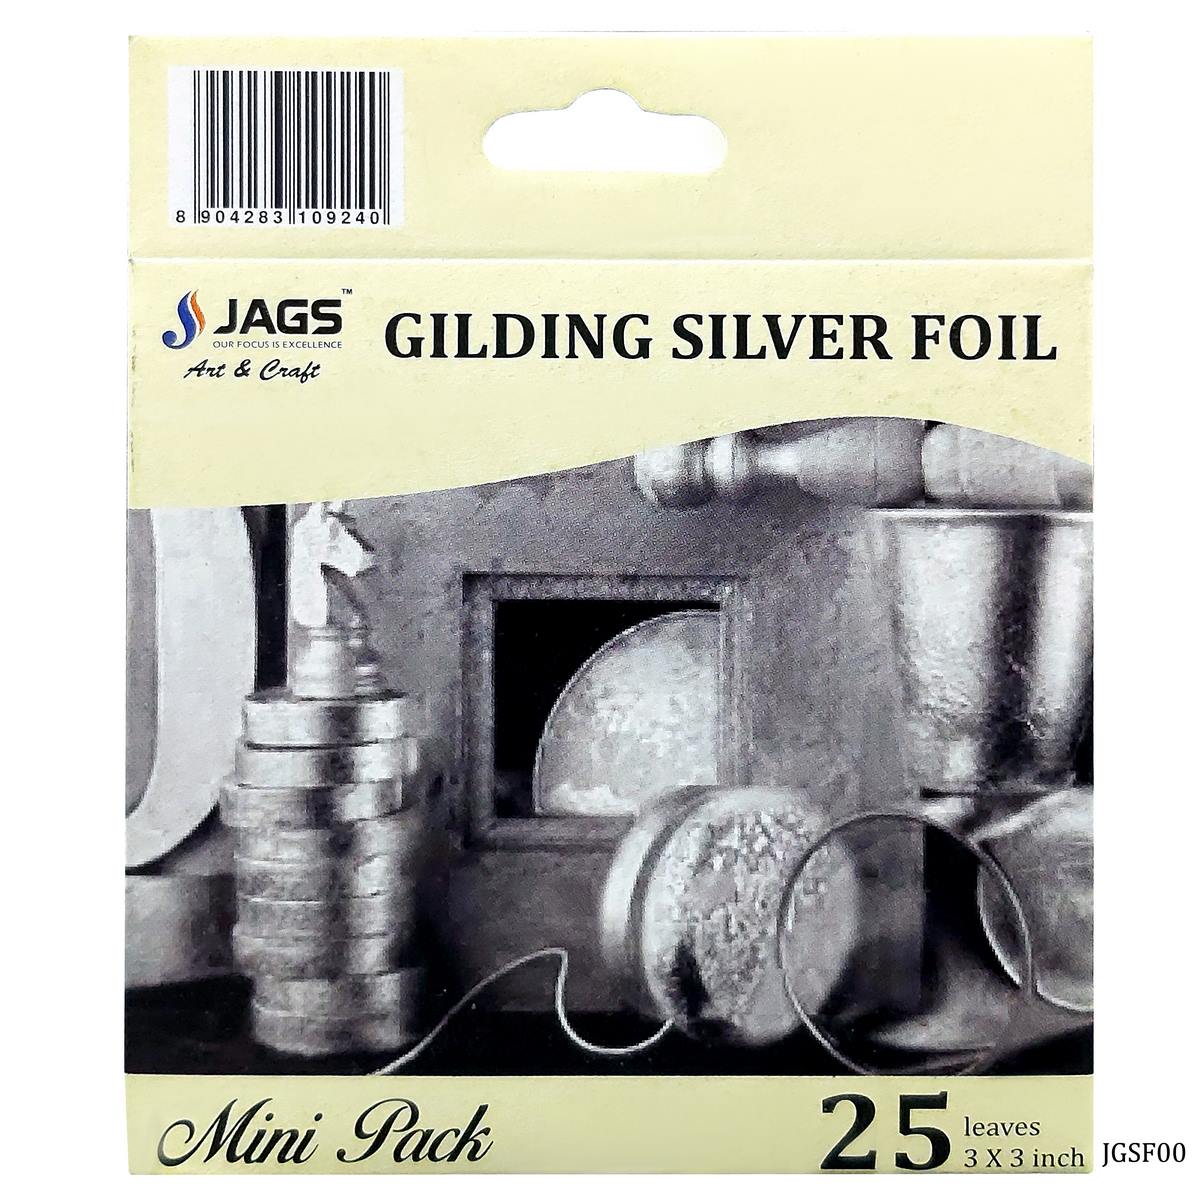 jags-mumbai Paper Jags Gilding Foil 3X3 Inch Silver